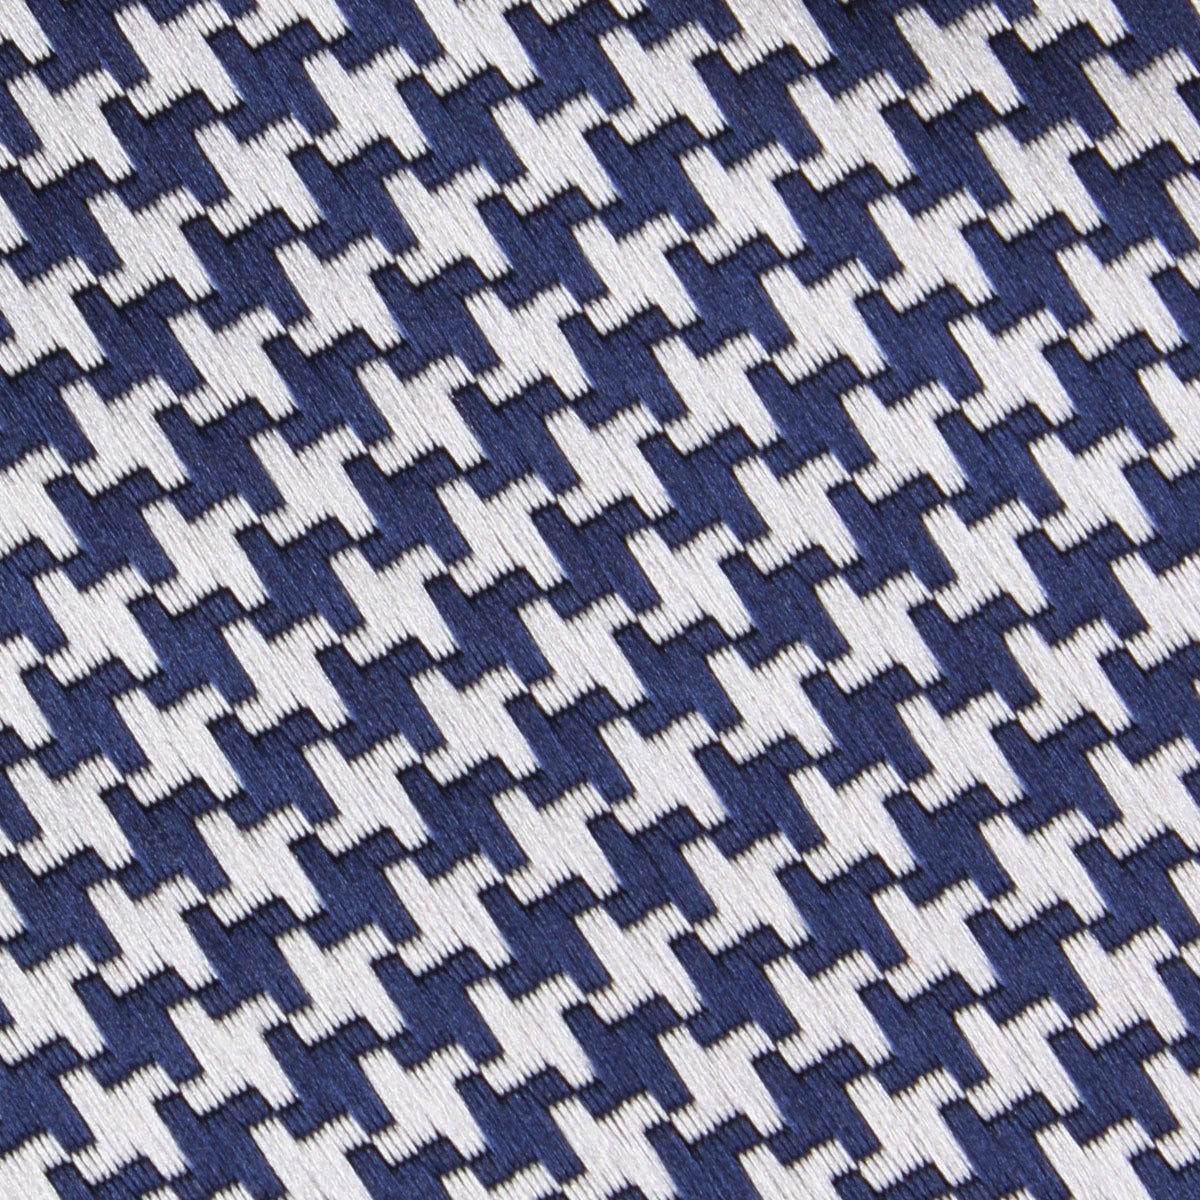 Deep Blue Houndstooth Fabric Skinny Tie